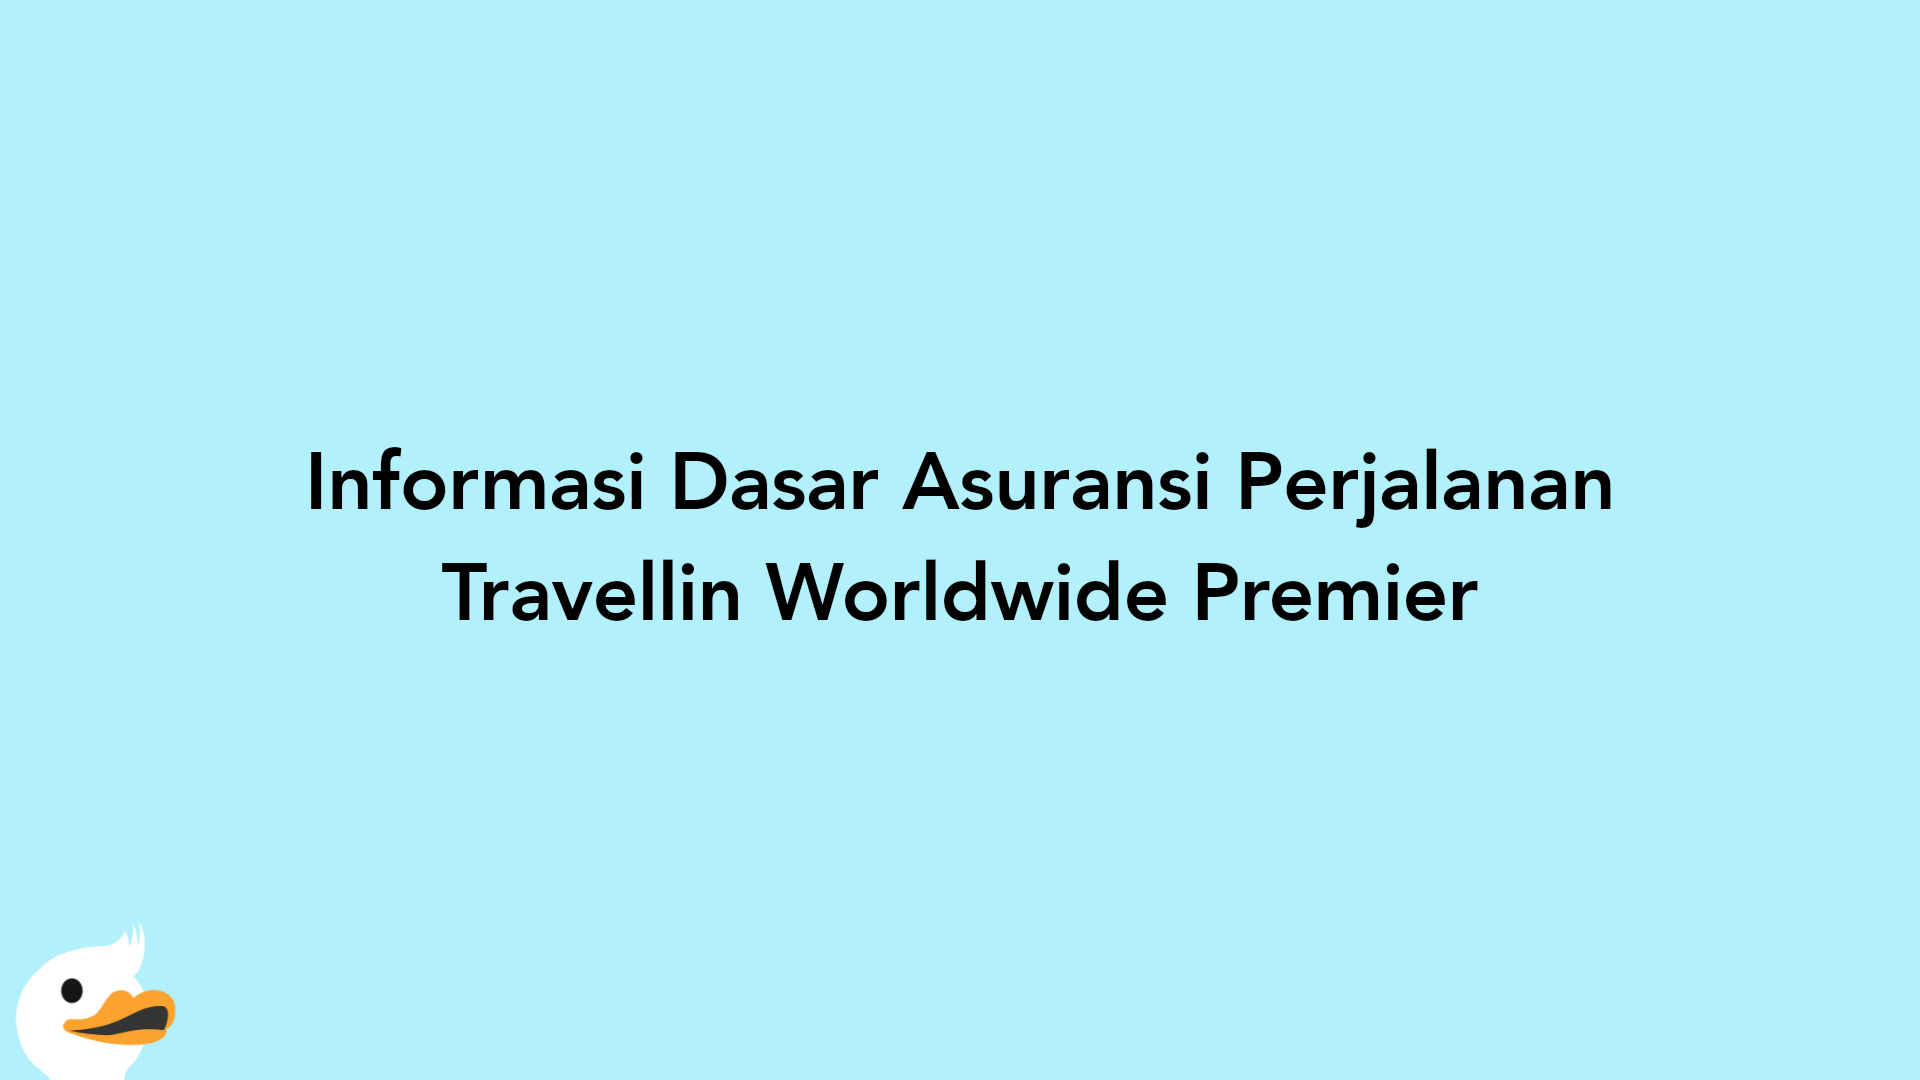 Informasi Dasar Asuransi Perjalanan Travellin Worldwide Premier